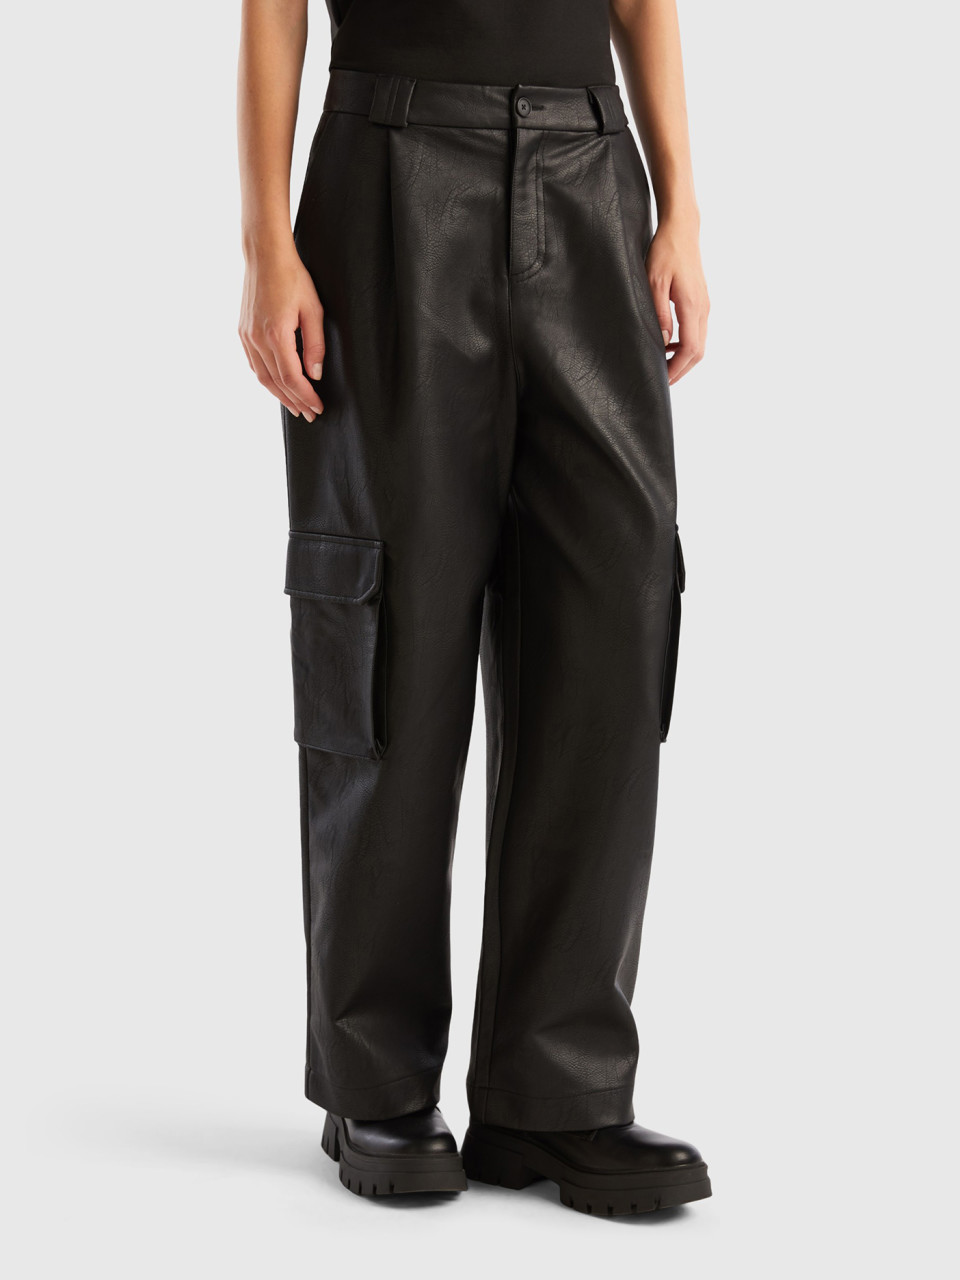 Benetton, Cargo Trousers In Imitation Leather Fabric, Black, Women